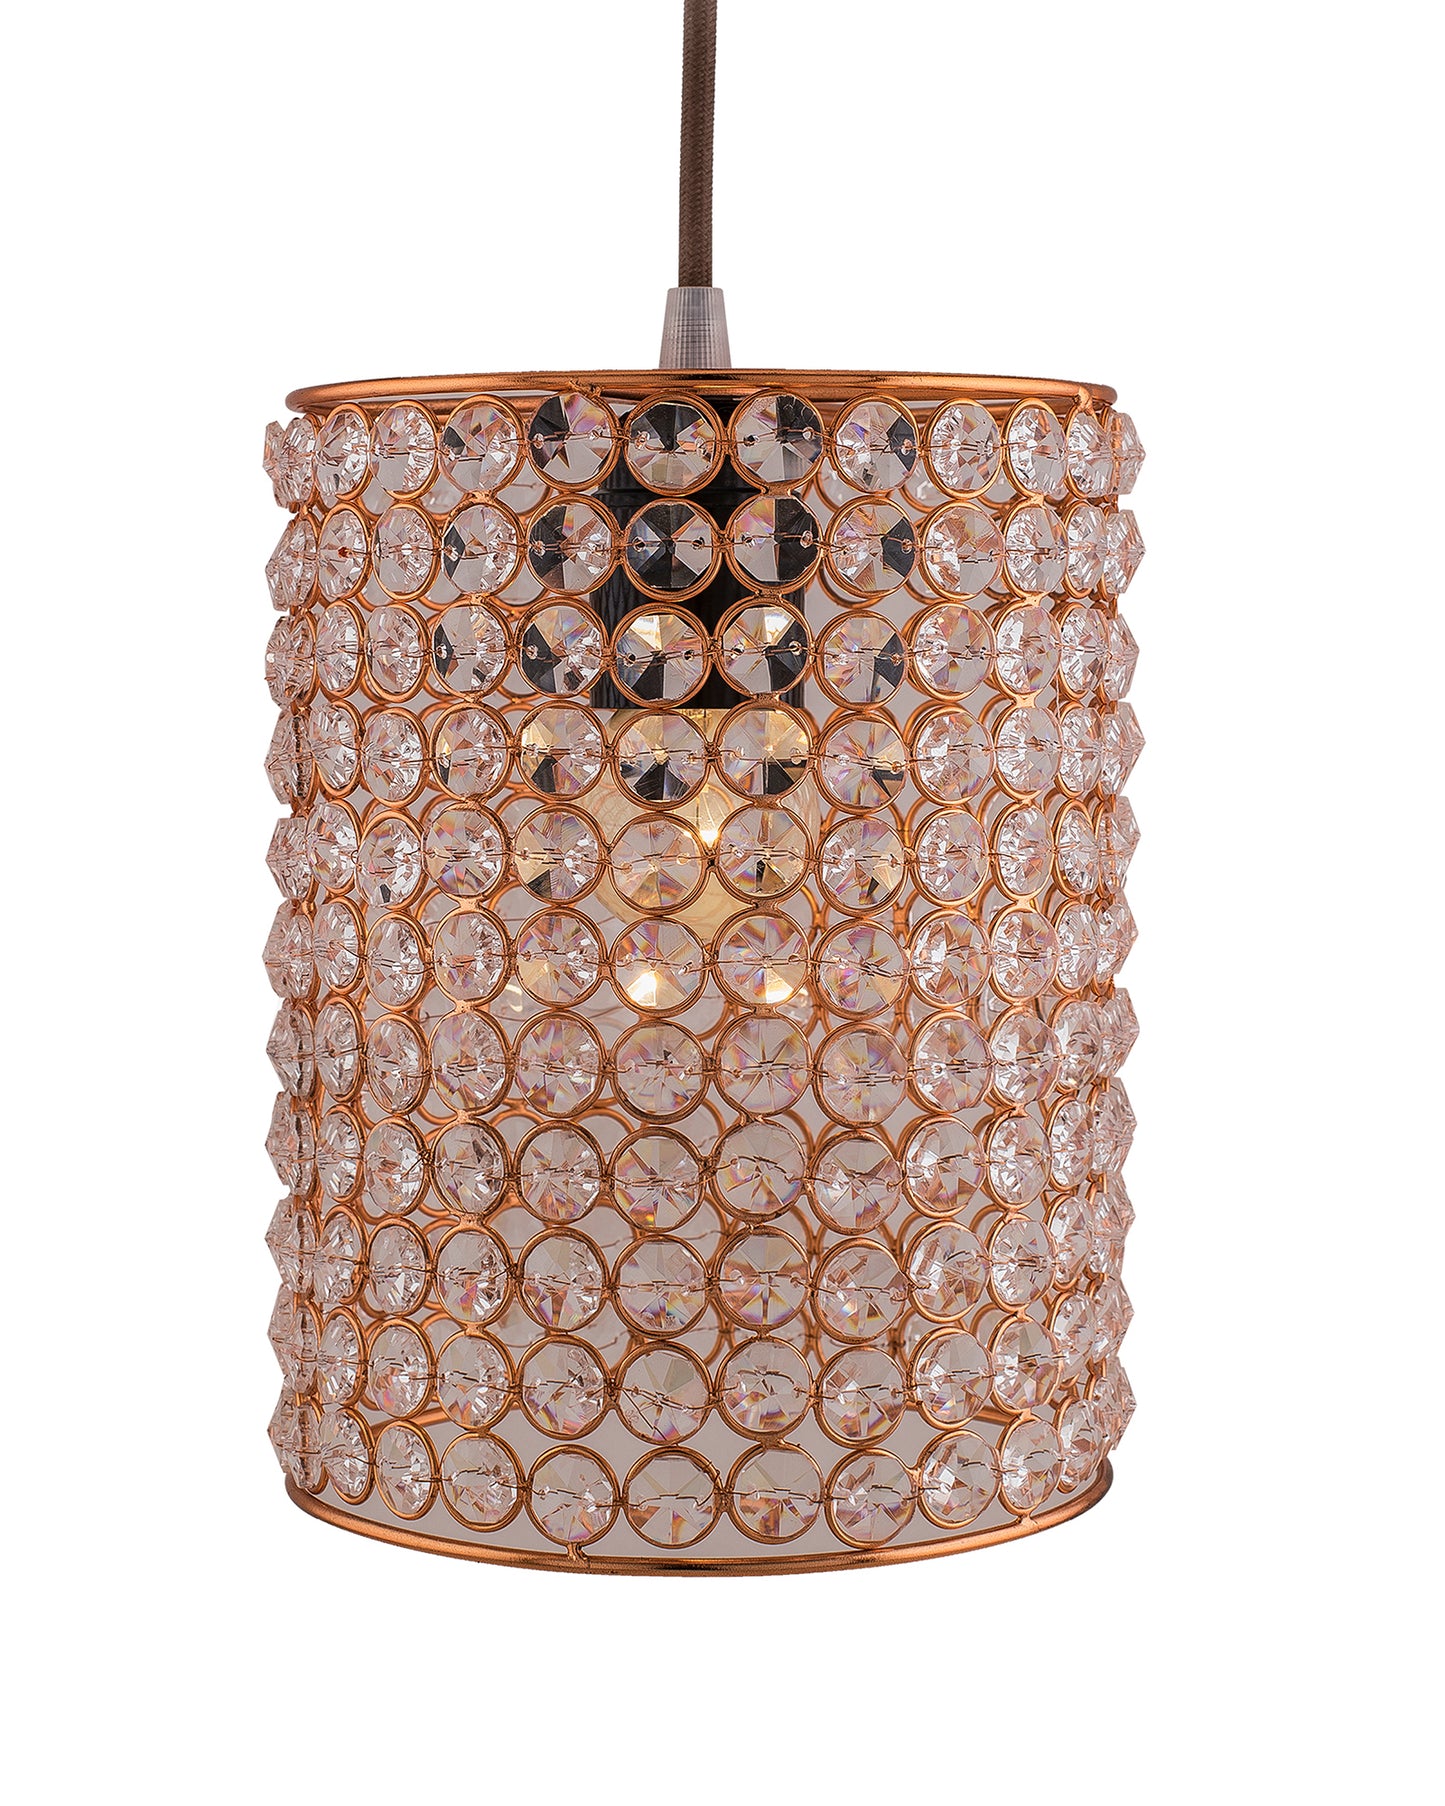 Crystal Hanging Copper Barrel Pendant, Rose Gold, Hanging Ceiling Light, Small